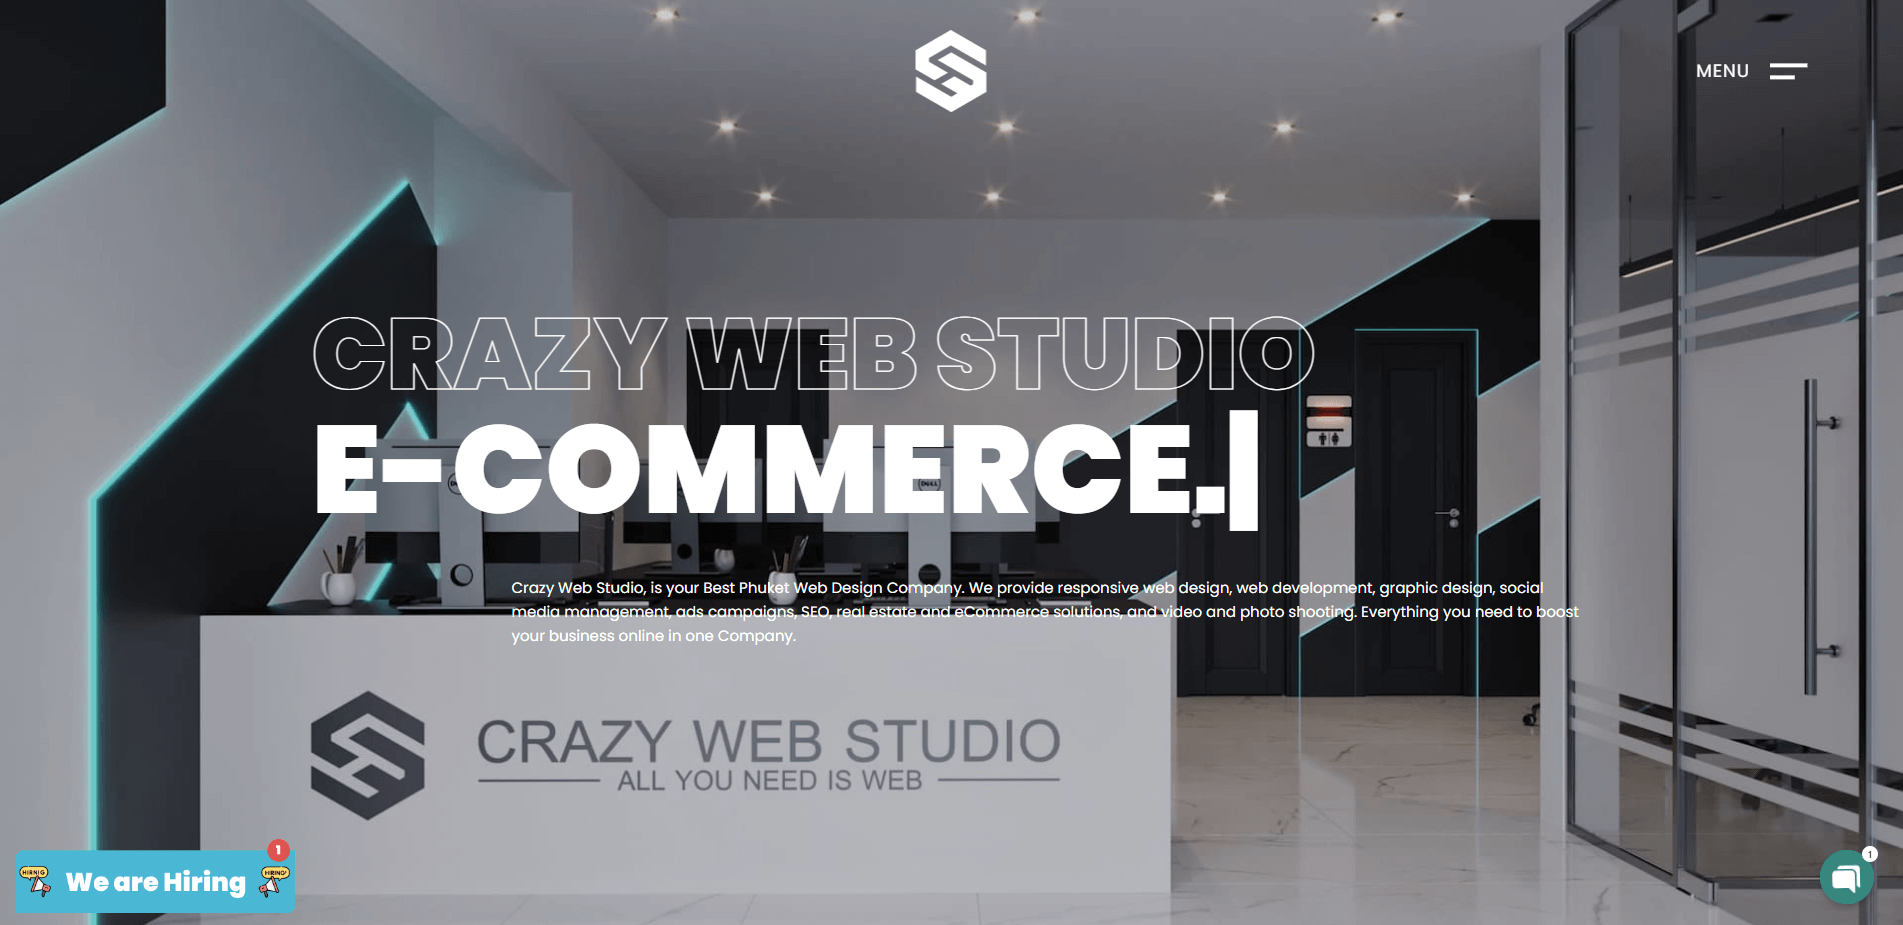 Crazy Web Studio Co., Ltd.